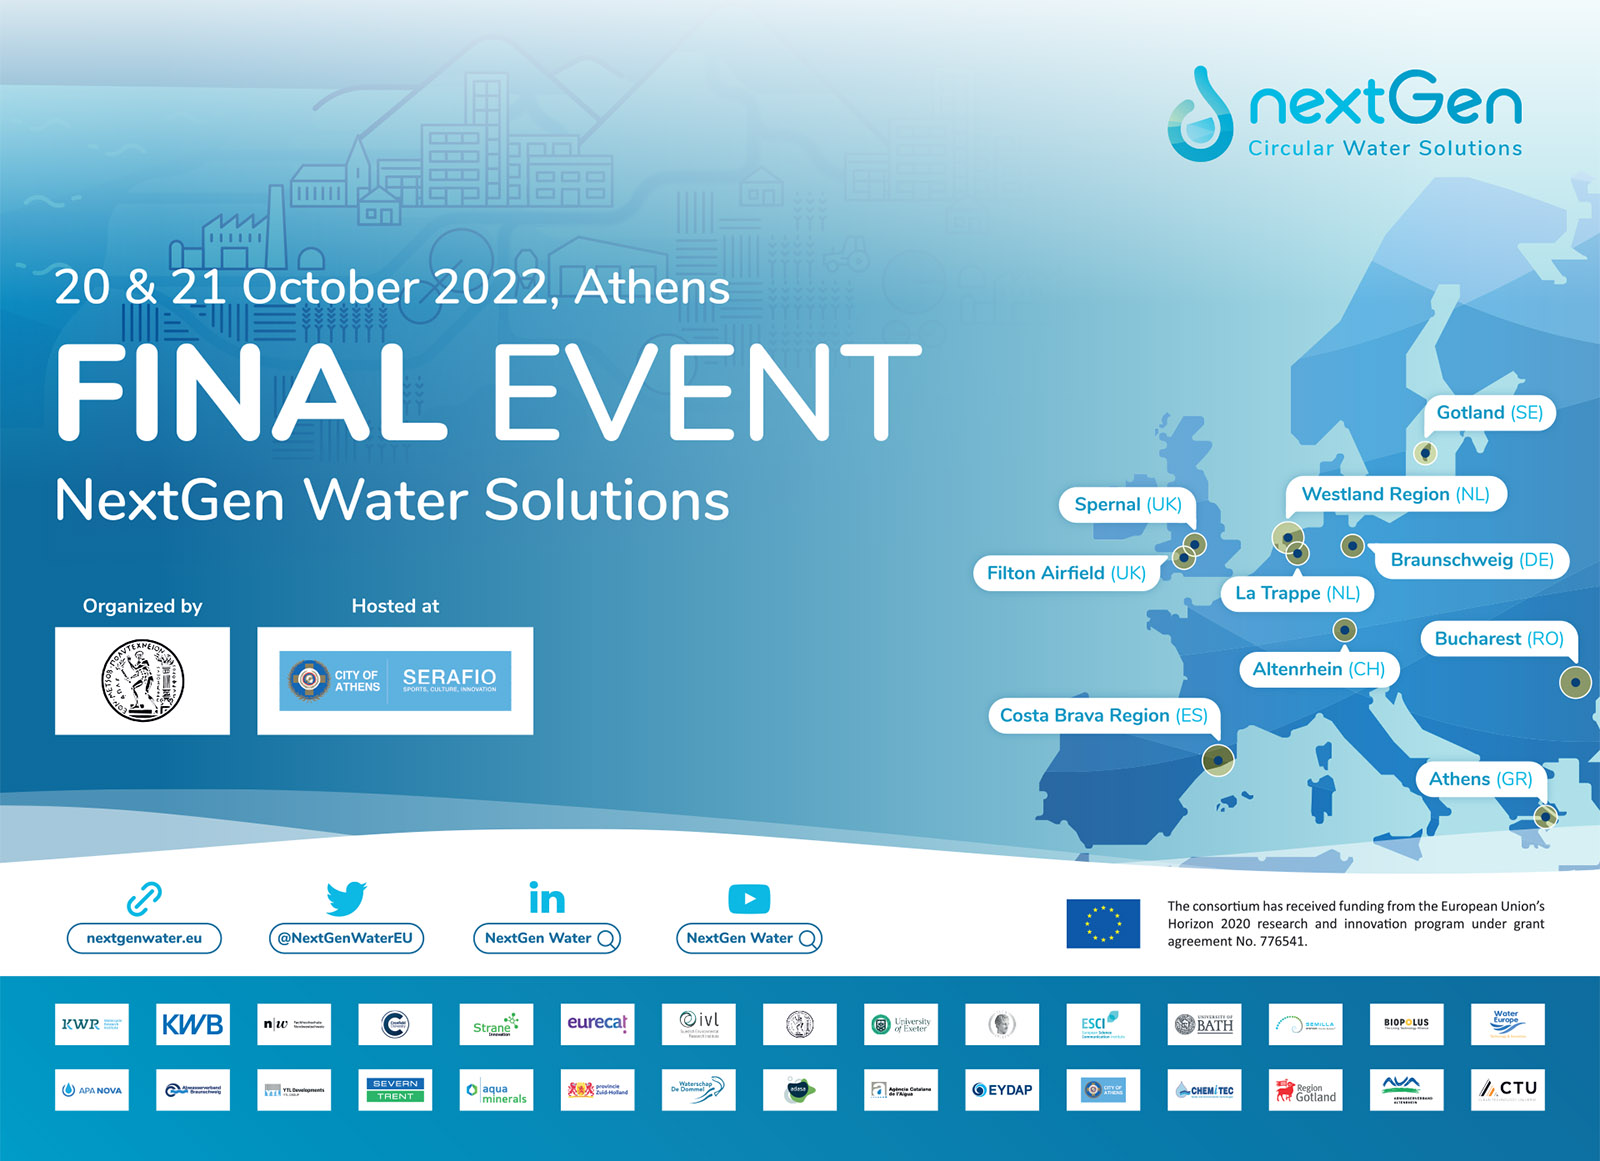 Successful NextGen Final Event held in Athens by NTUA